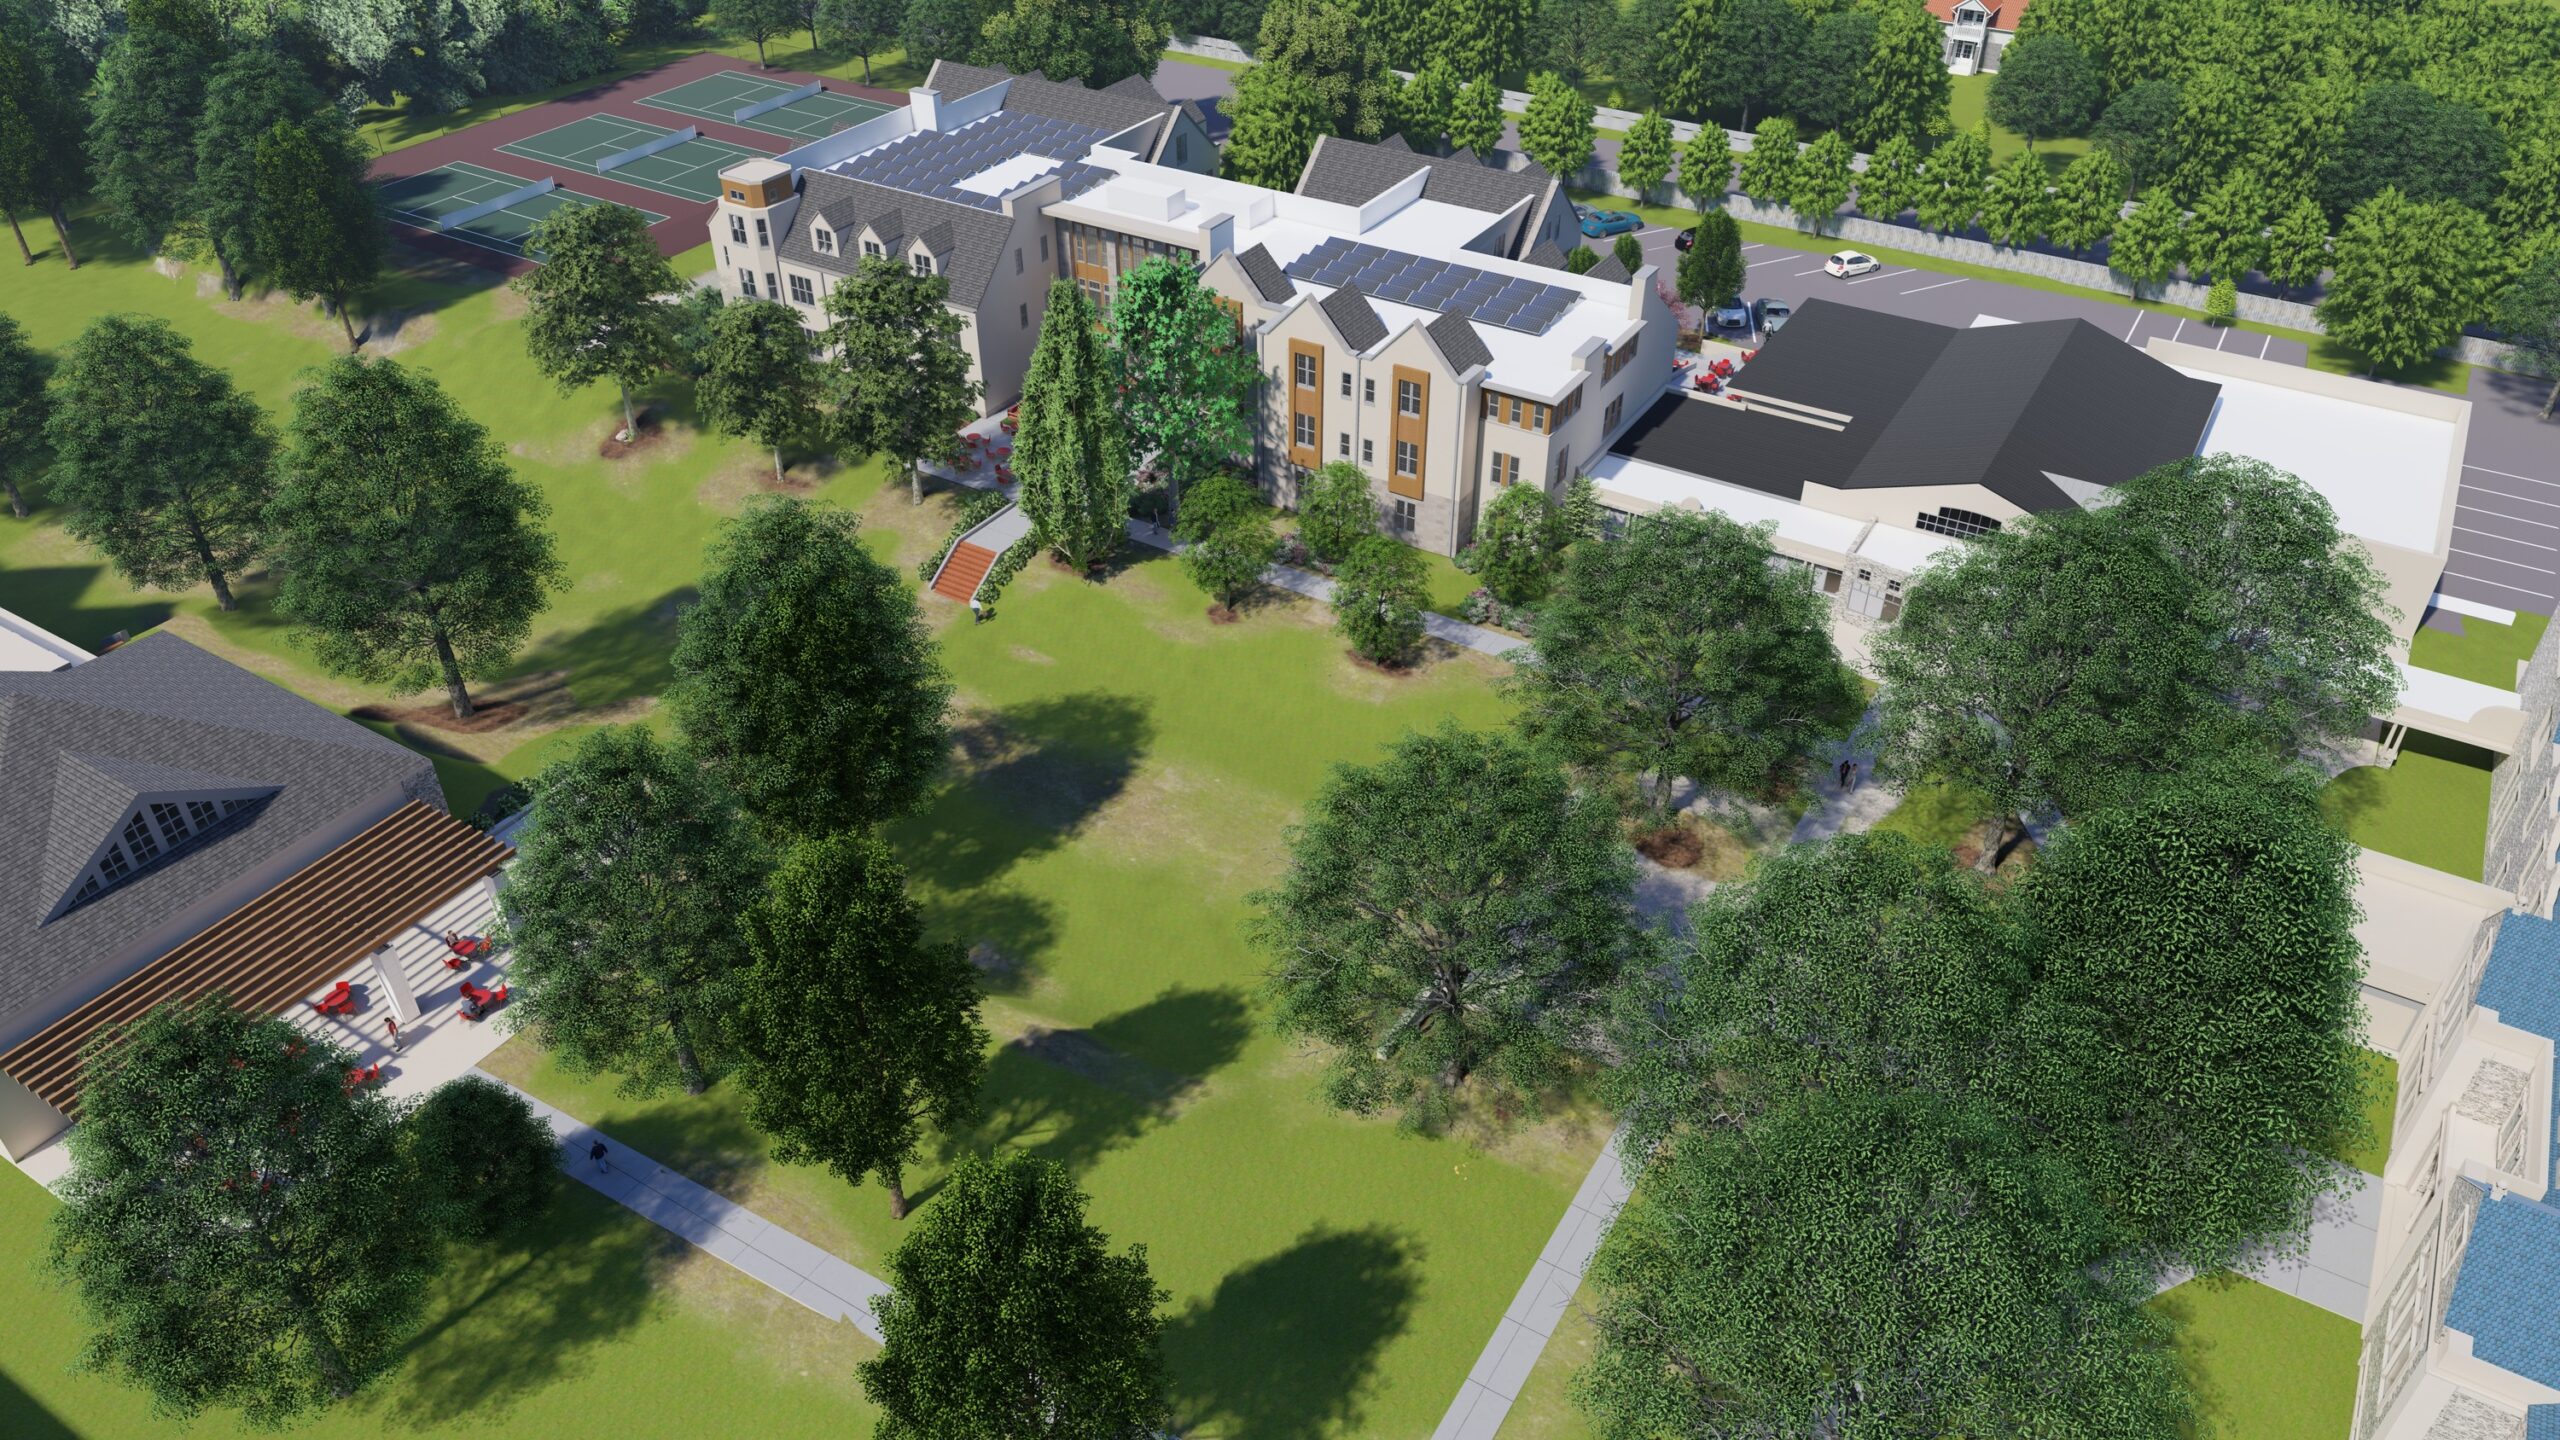 The Hun School of Princeton: New Dormitory